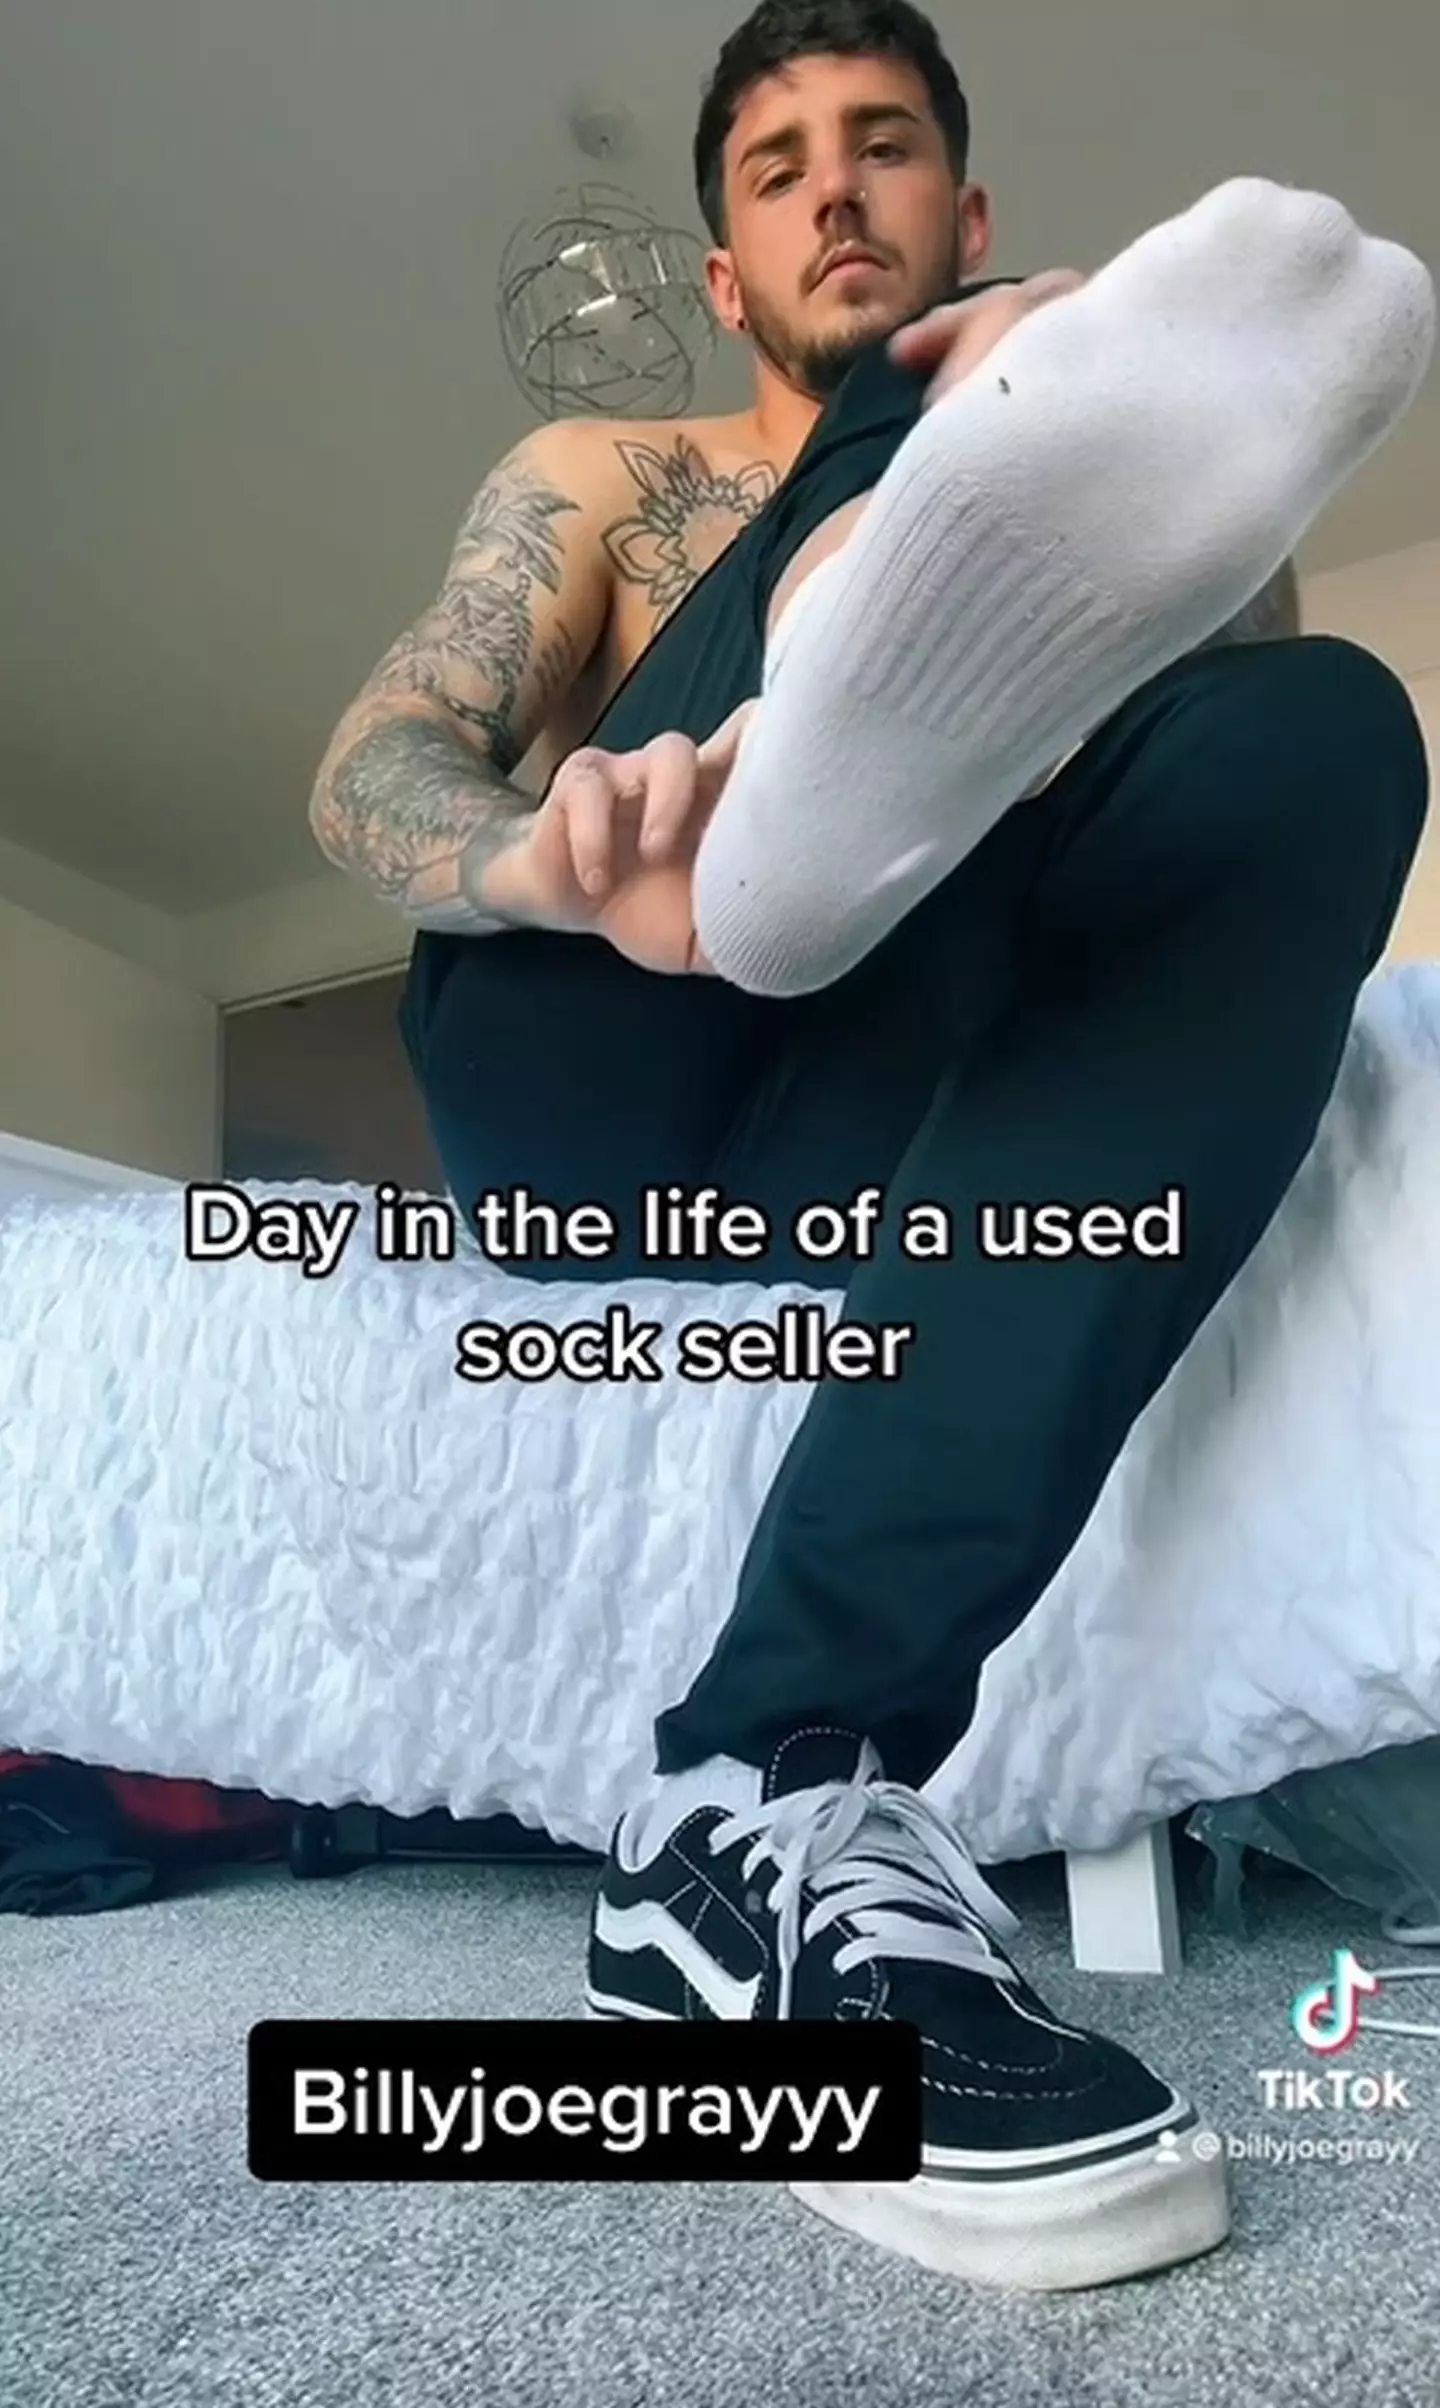 Billy-Joe Gray sells his old socks online.